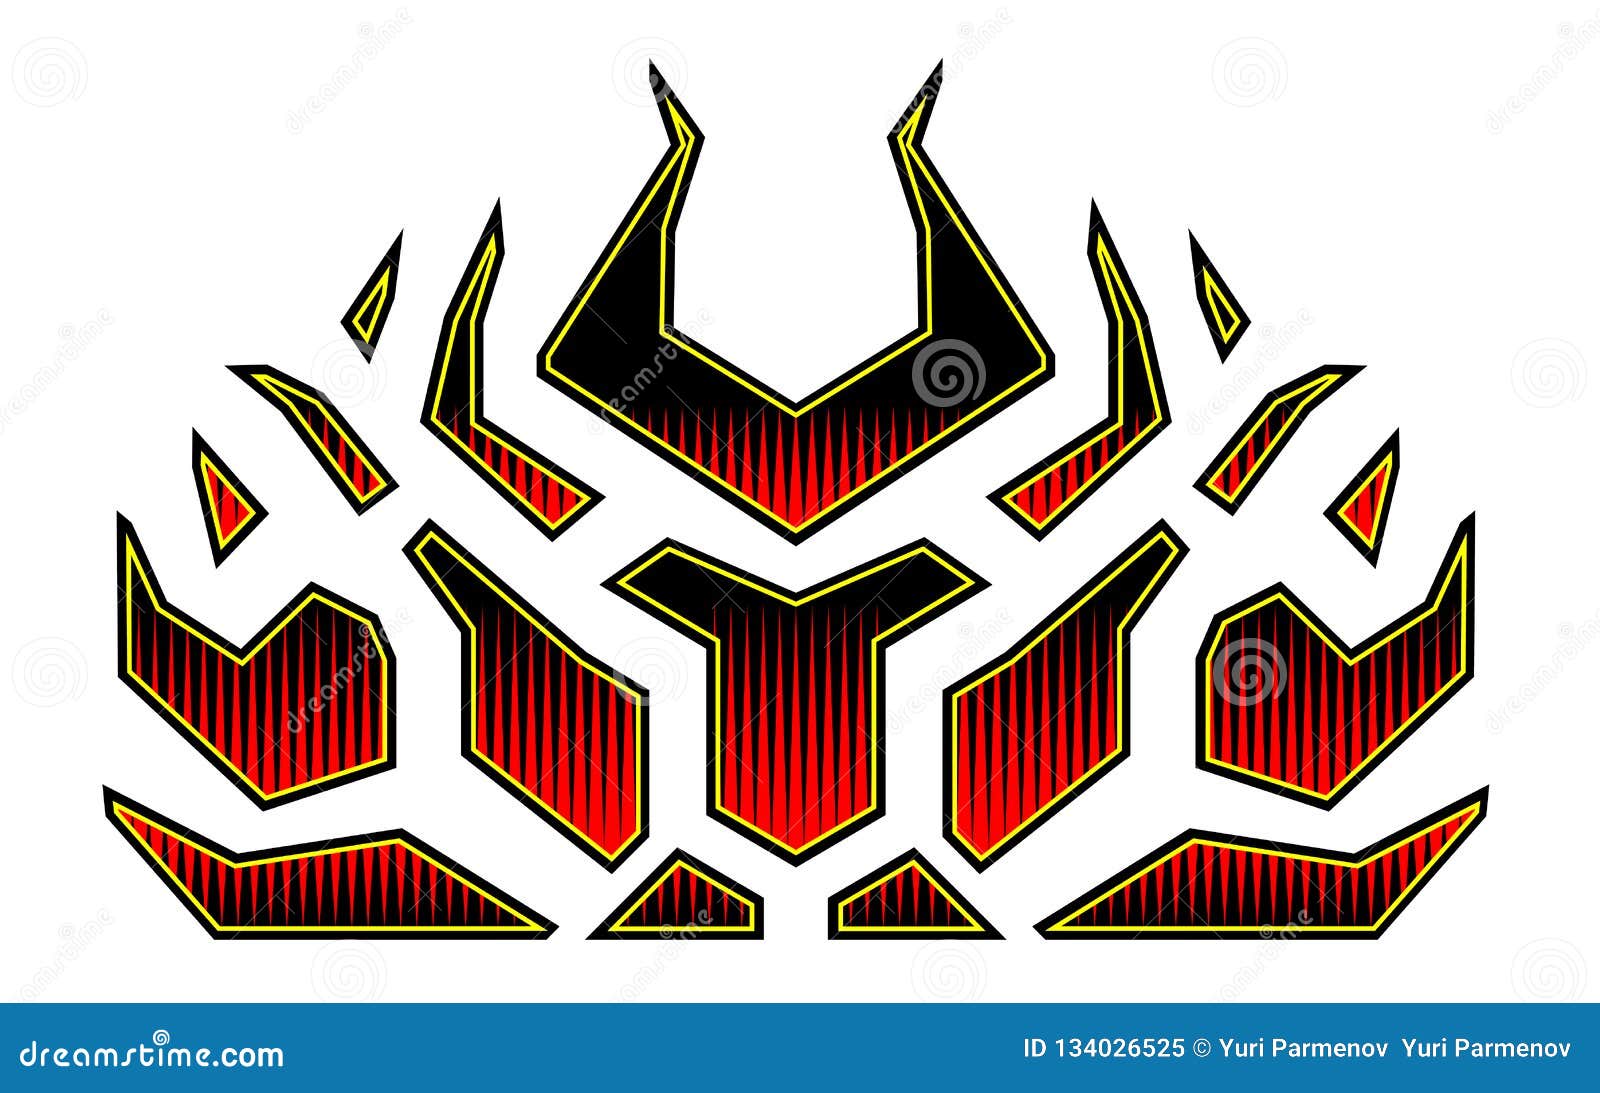 HOT ROD Hood flames #002 Decal Sticker JDM Vinyl Graphics Car Window Bumper 35" 